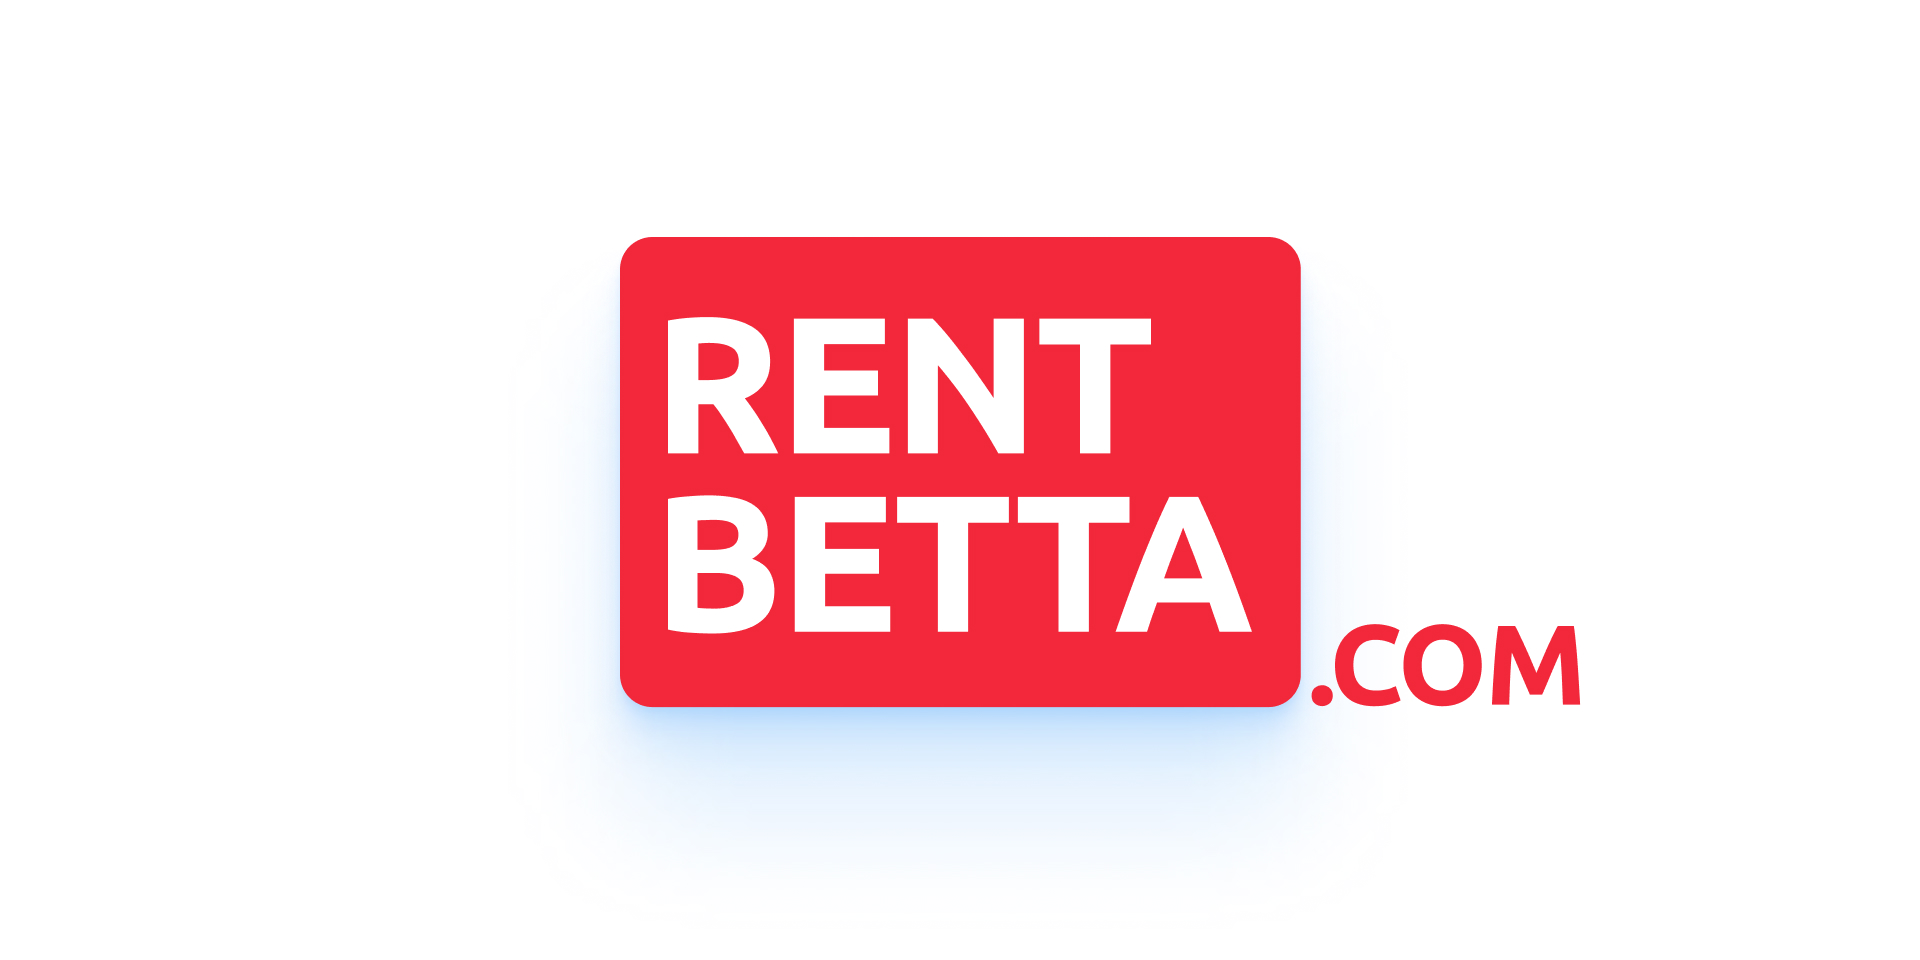 RENTBETTA.com Announces Median Rent in New York City Decreased 3.0% in November